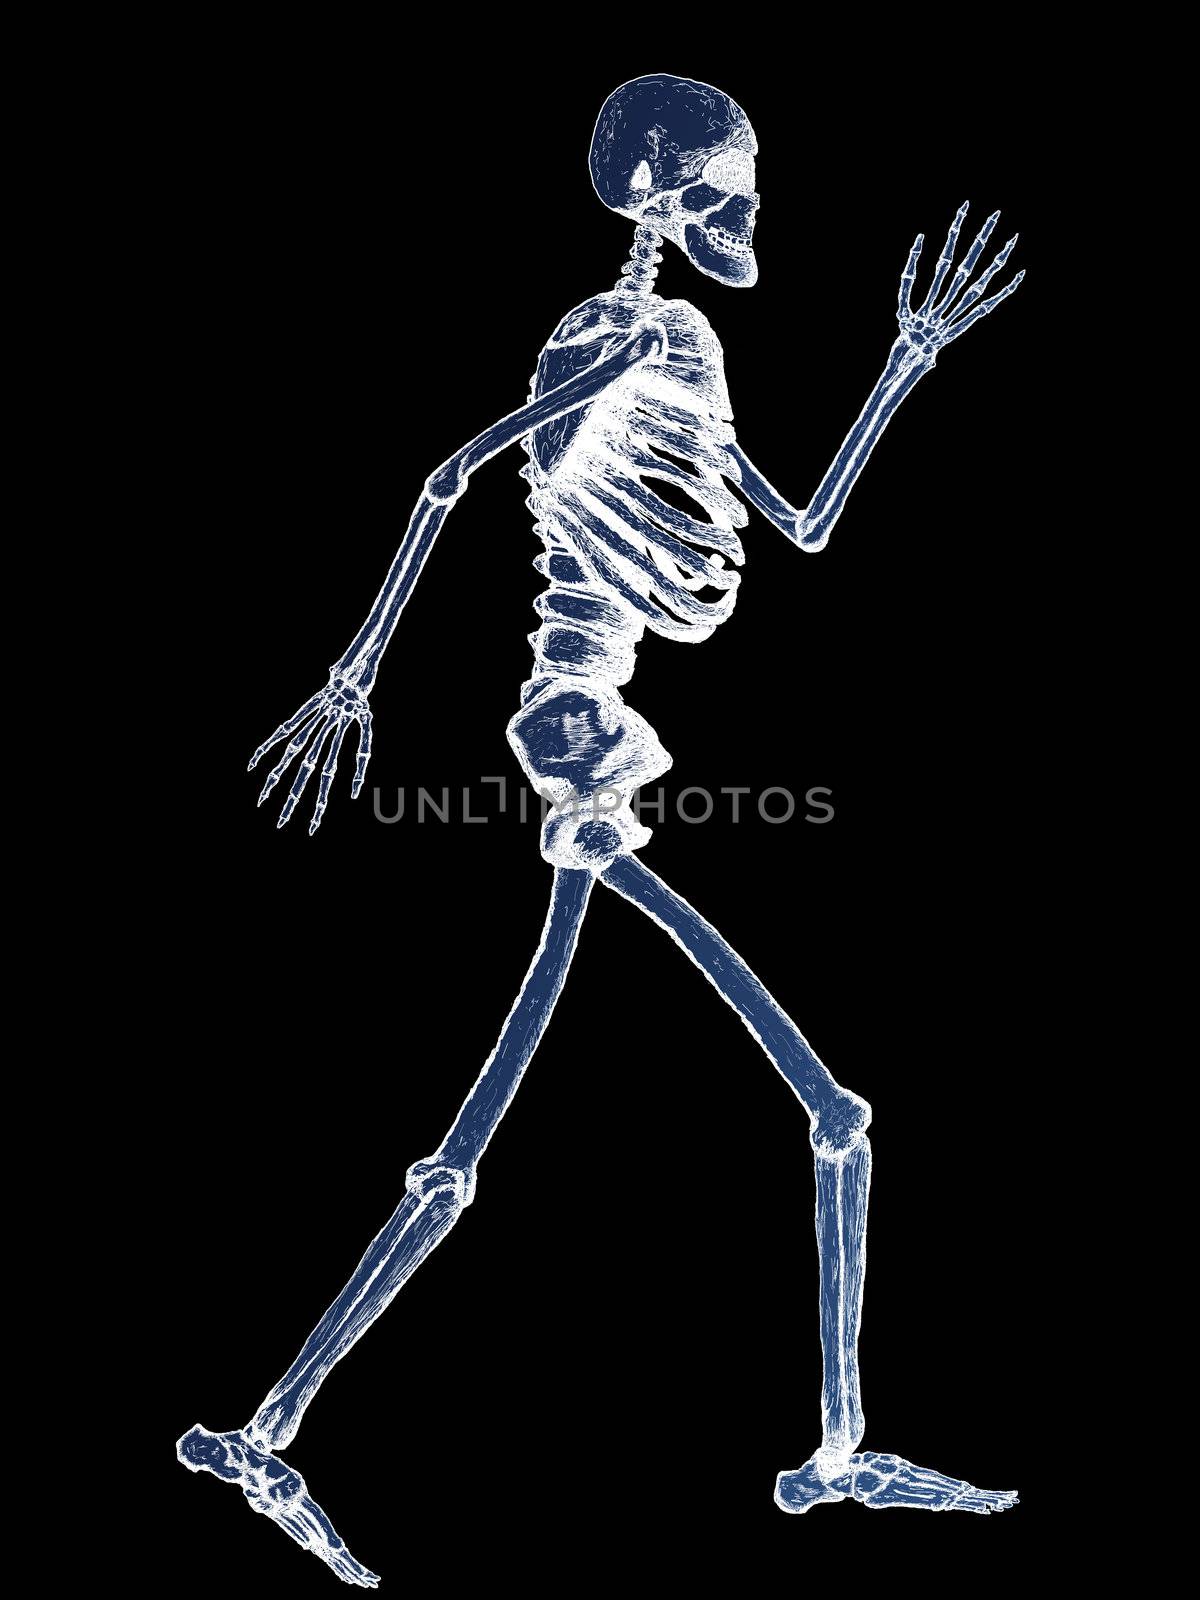 X-Ray of Full Human Skeleton Illustration on Black Background